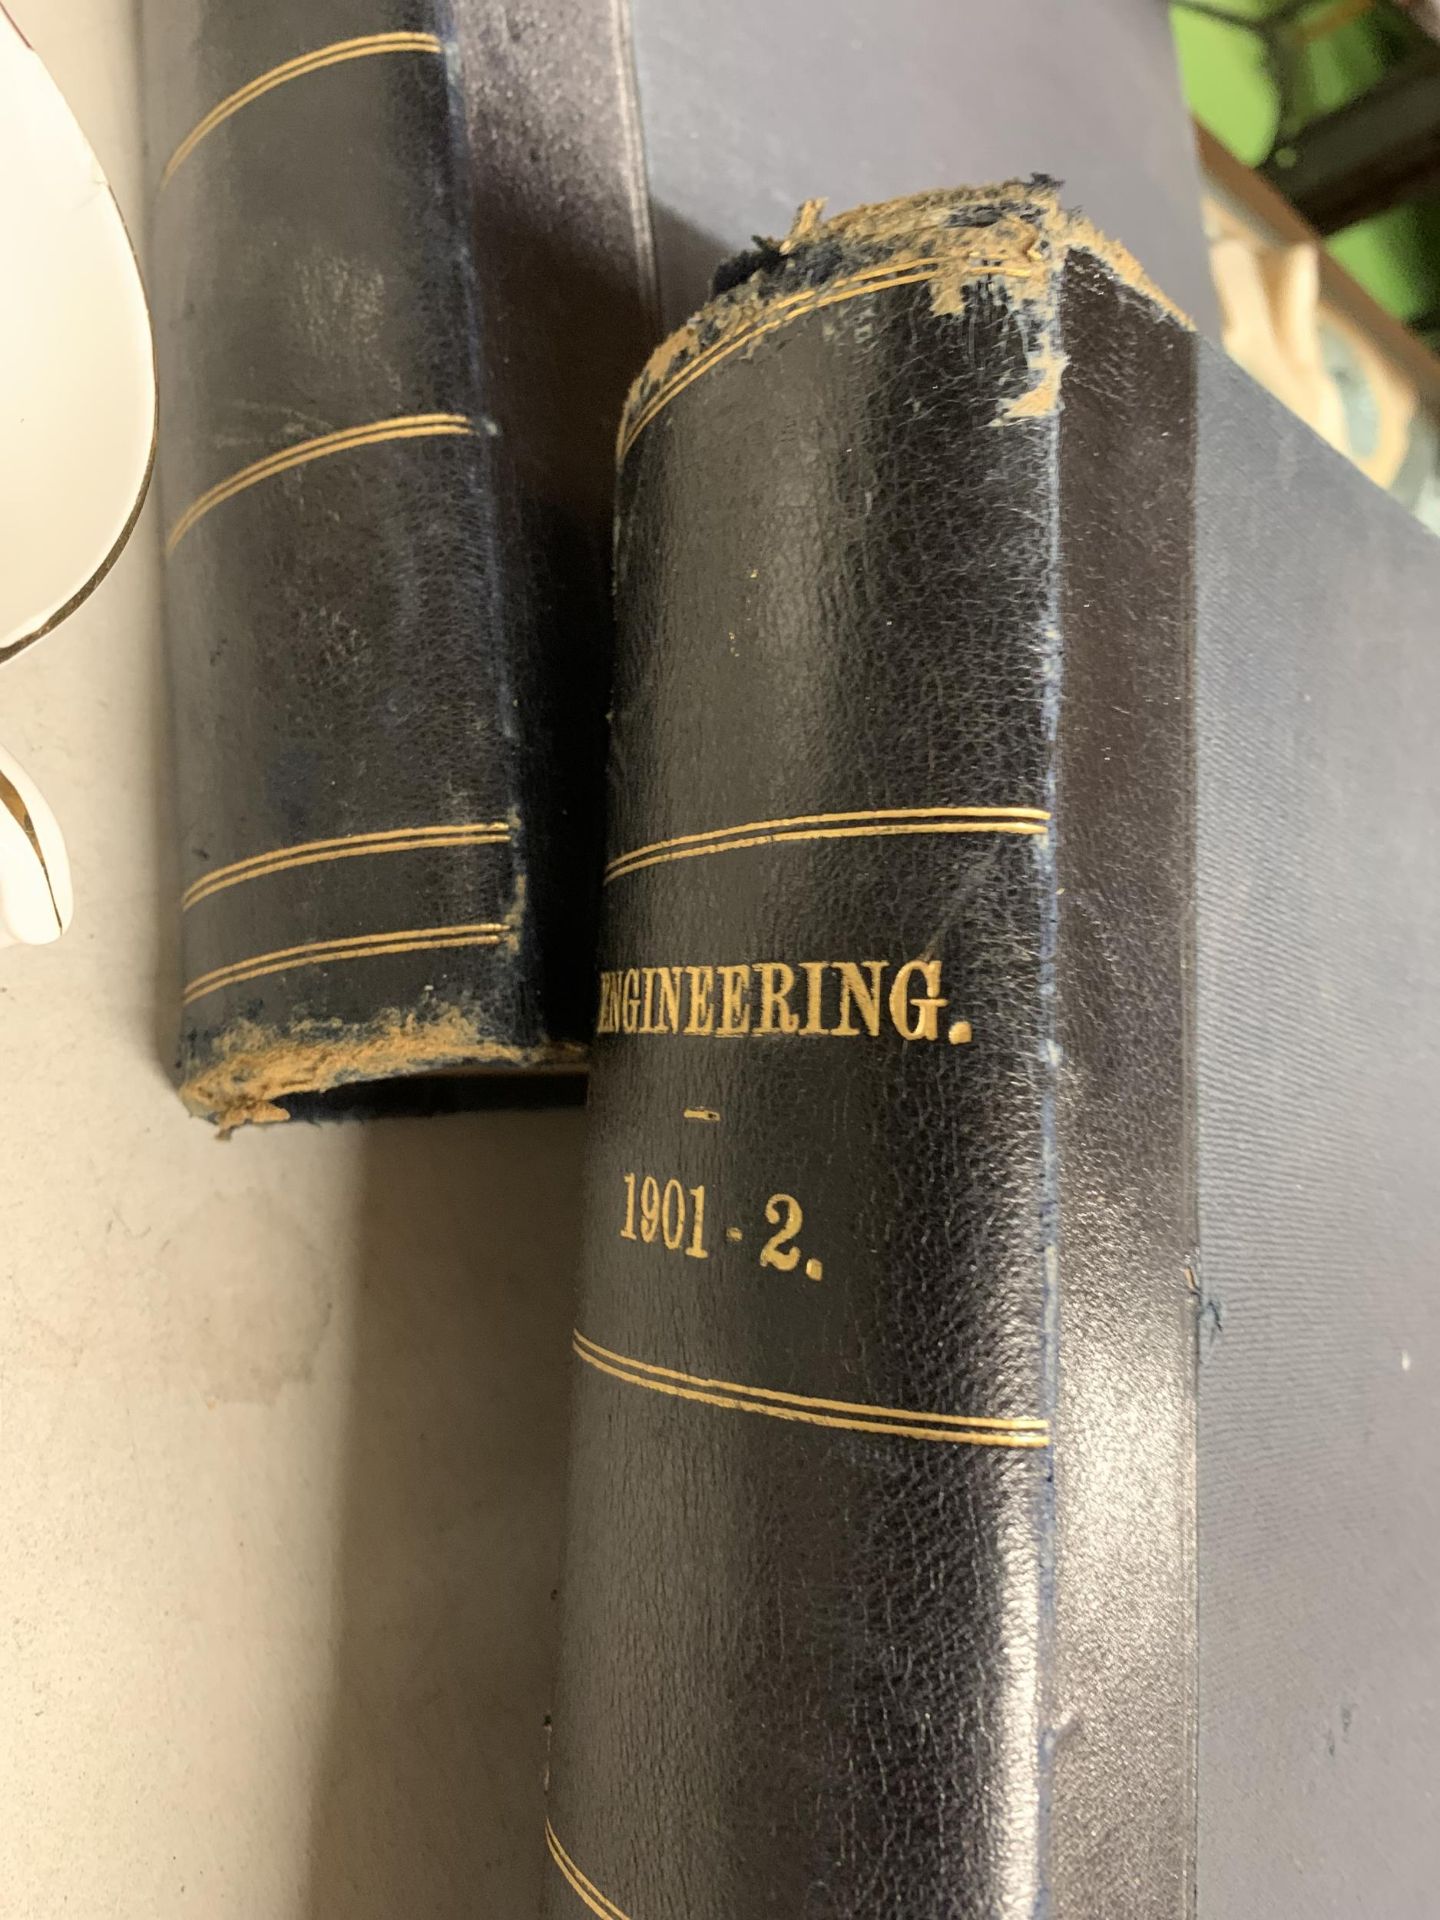 TWO LARGE HARDBACK VOLUMES OF 'ENGINEERING 1901' VOLUME 1 AND VOLUME 2 - Image 2 of 4